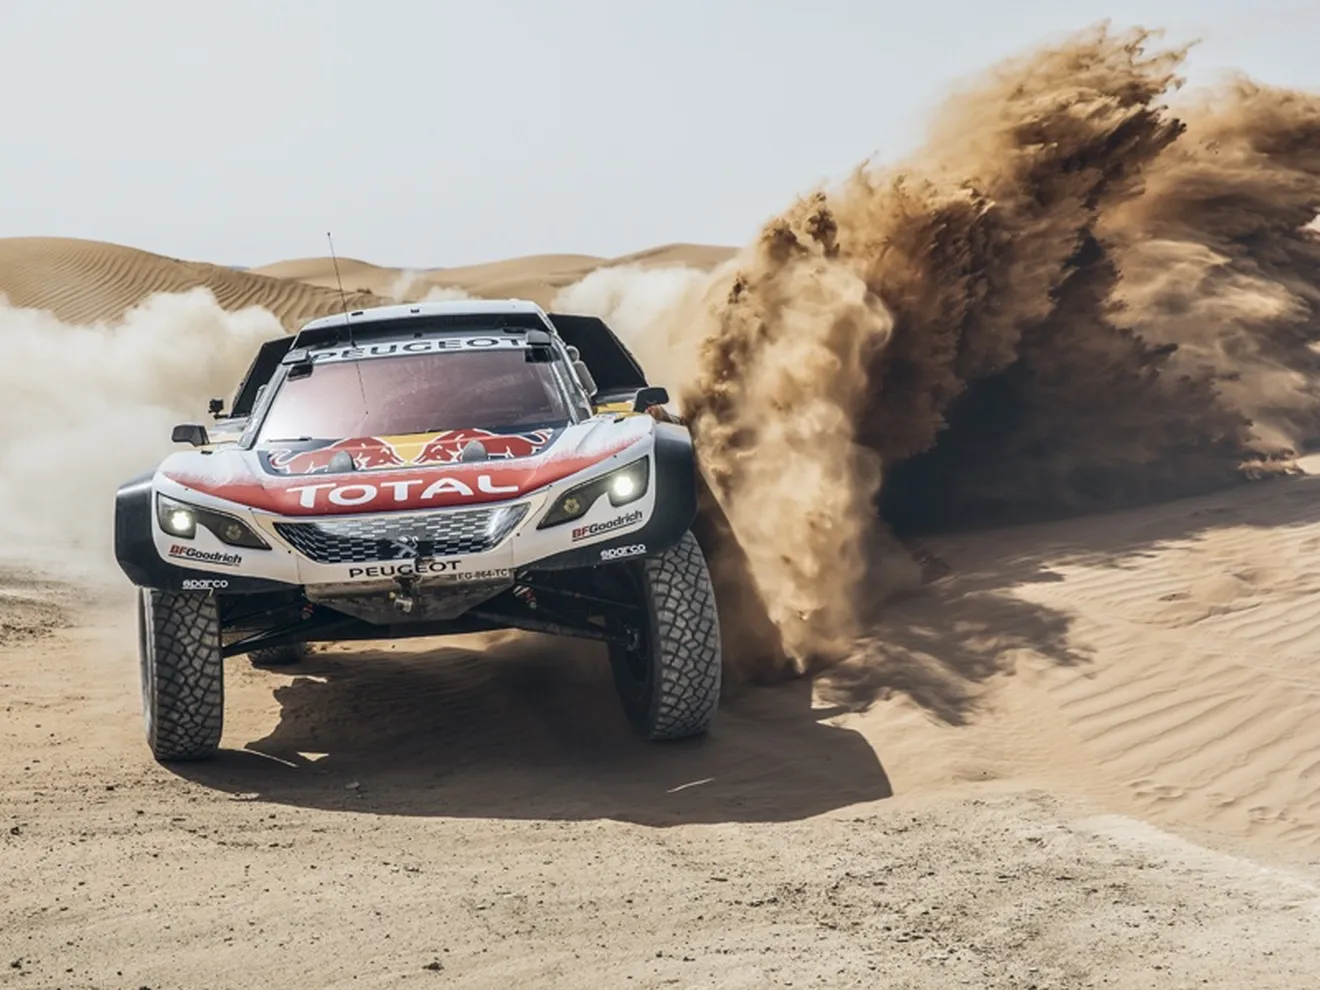 Peugeot cierra su programa en raids tras el Dakar 2018